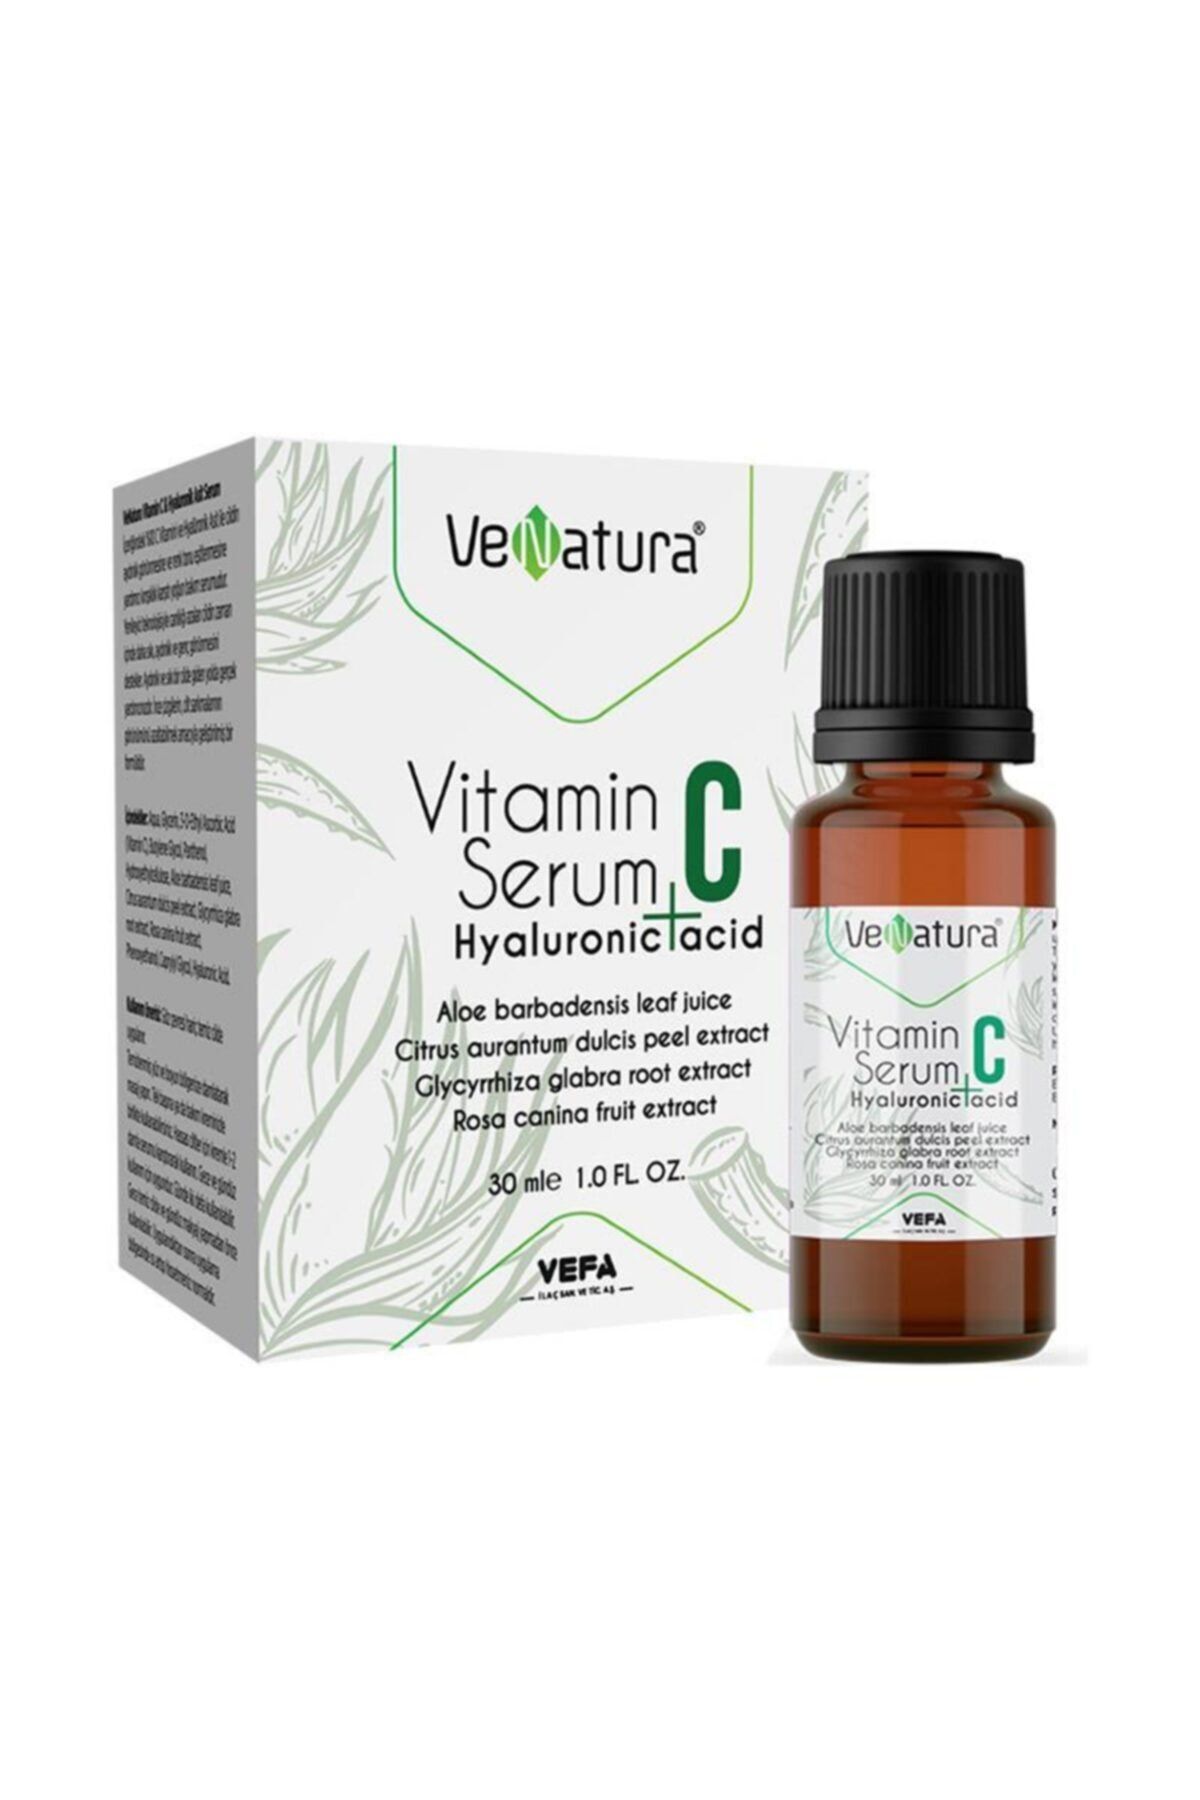 Venatura Vitamin C Serum + Hyaluronic Acid 30 Ml